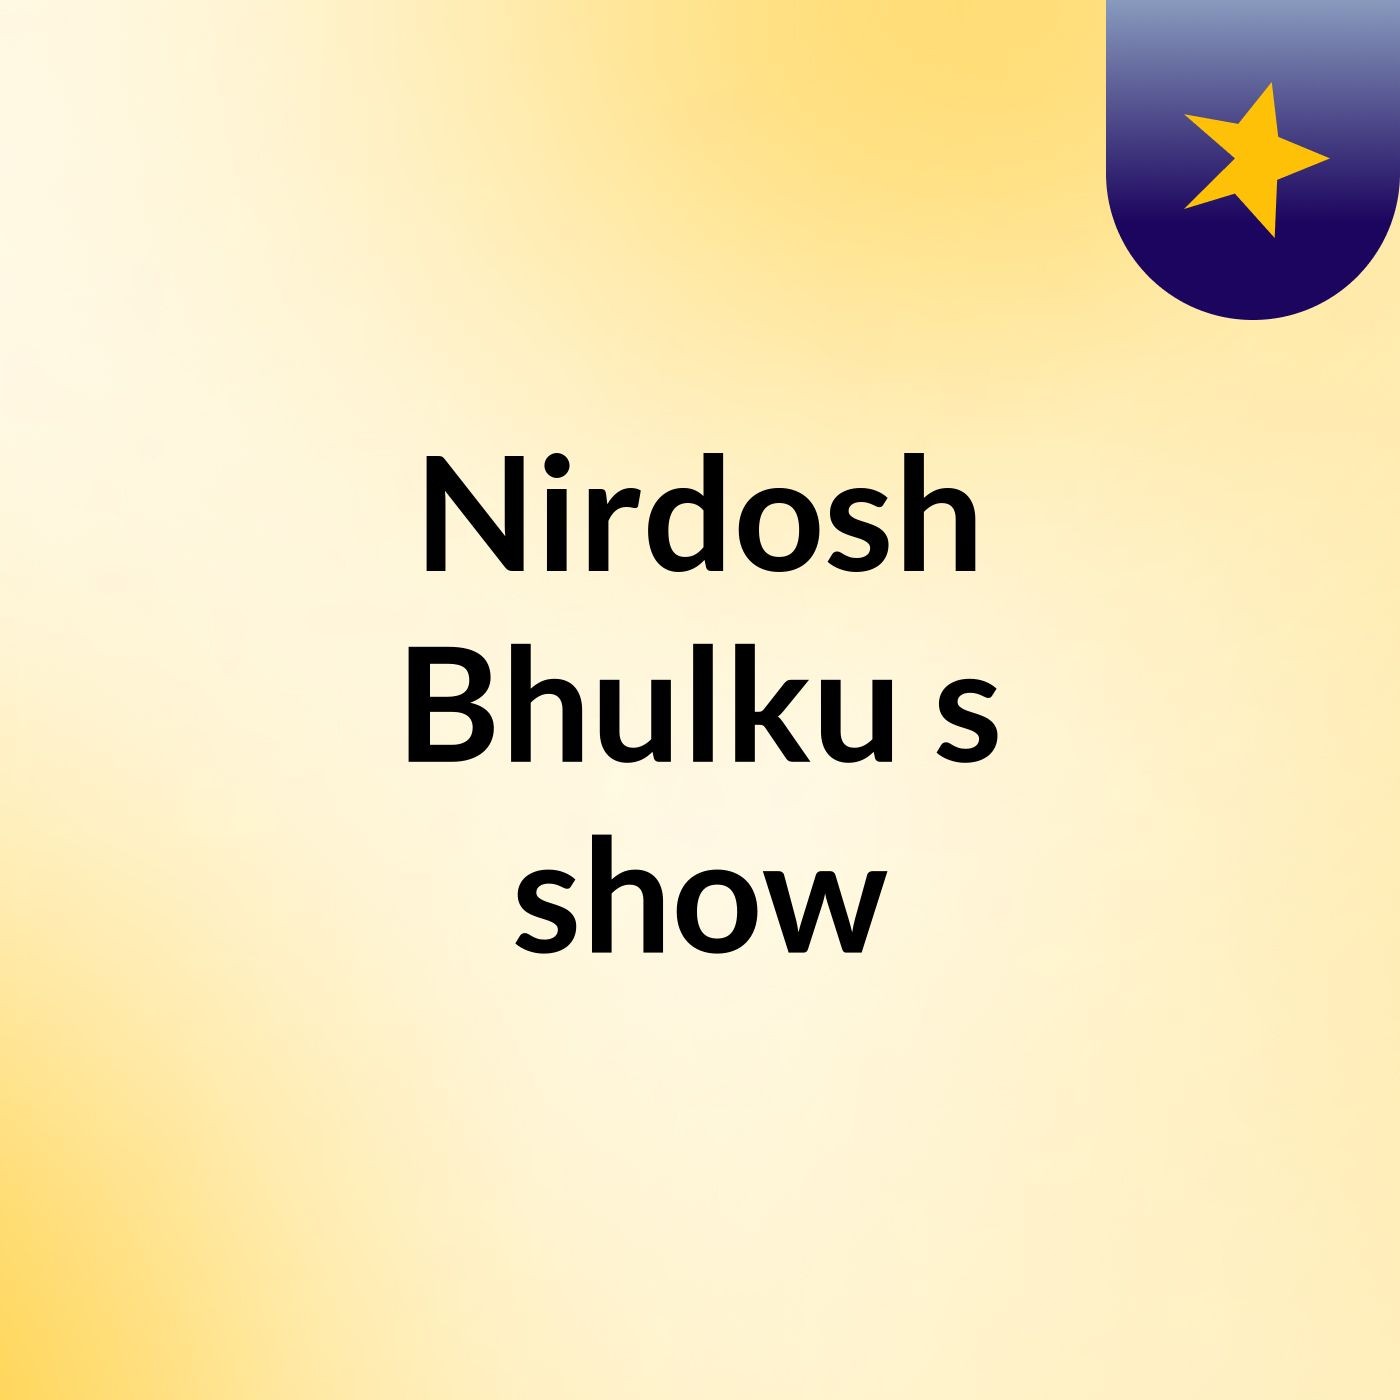 Nirdosh Bhulku's show